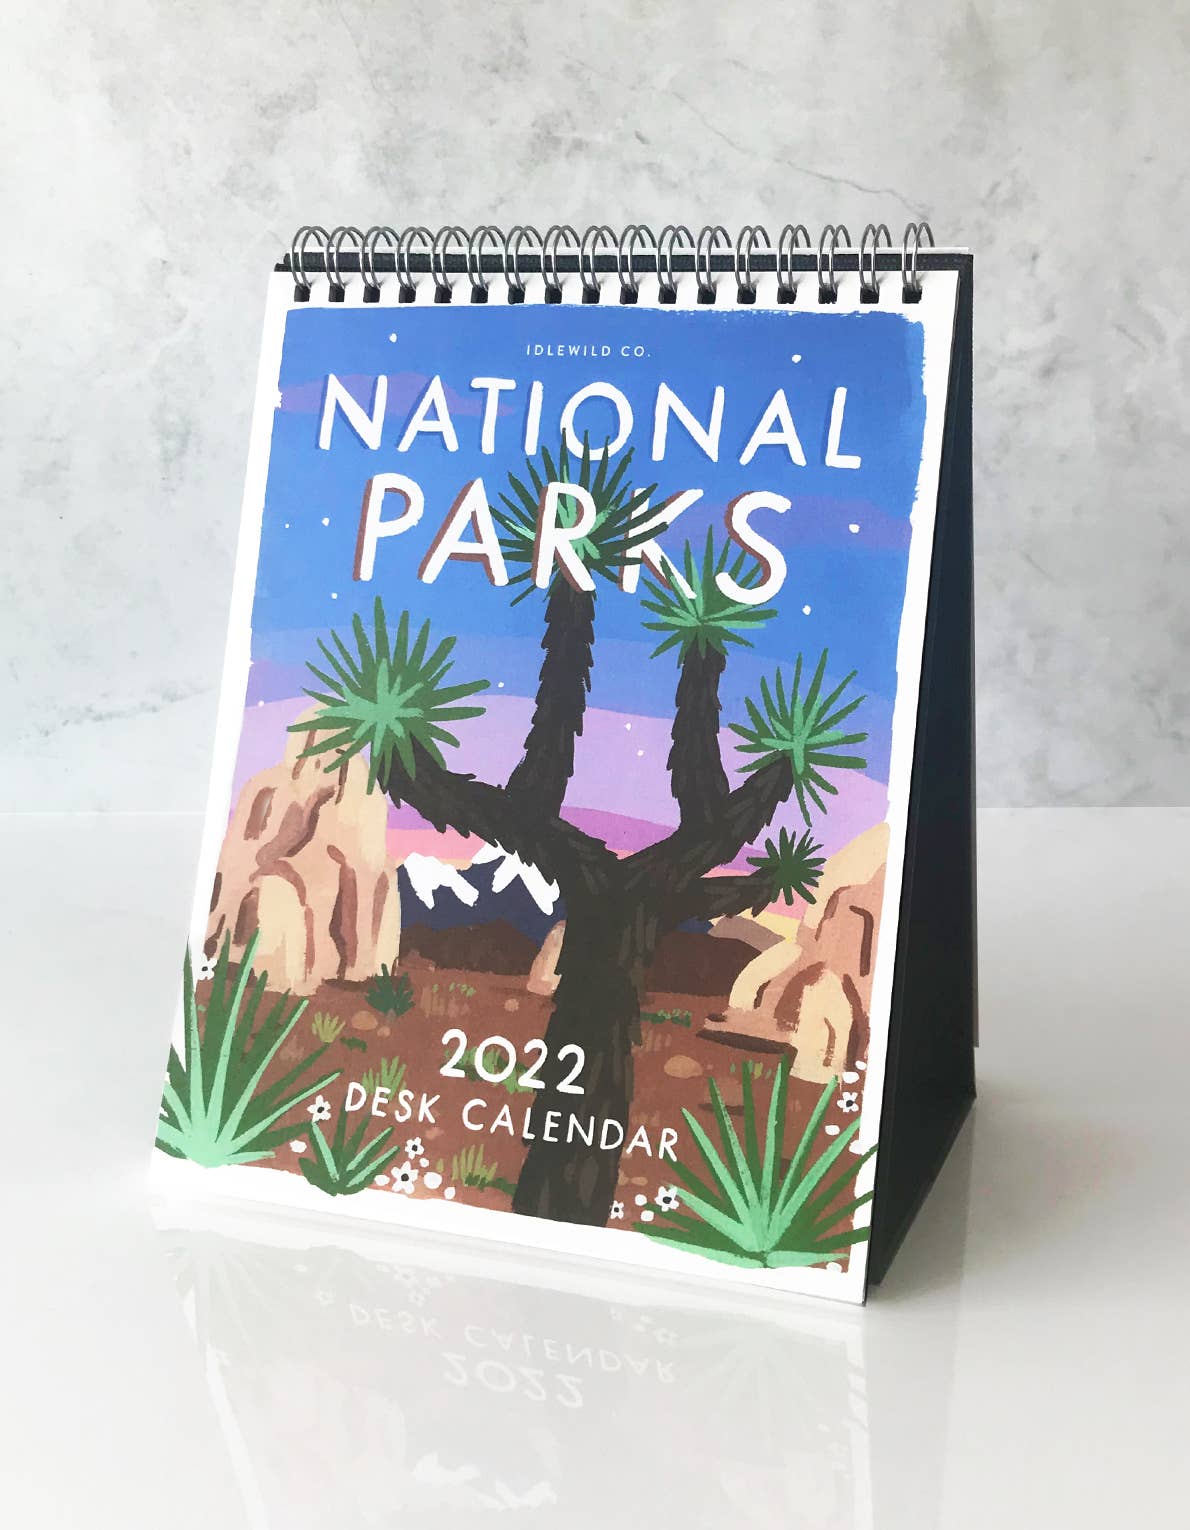 National Parks 2022 Desk calendar by Idlewild